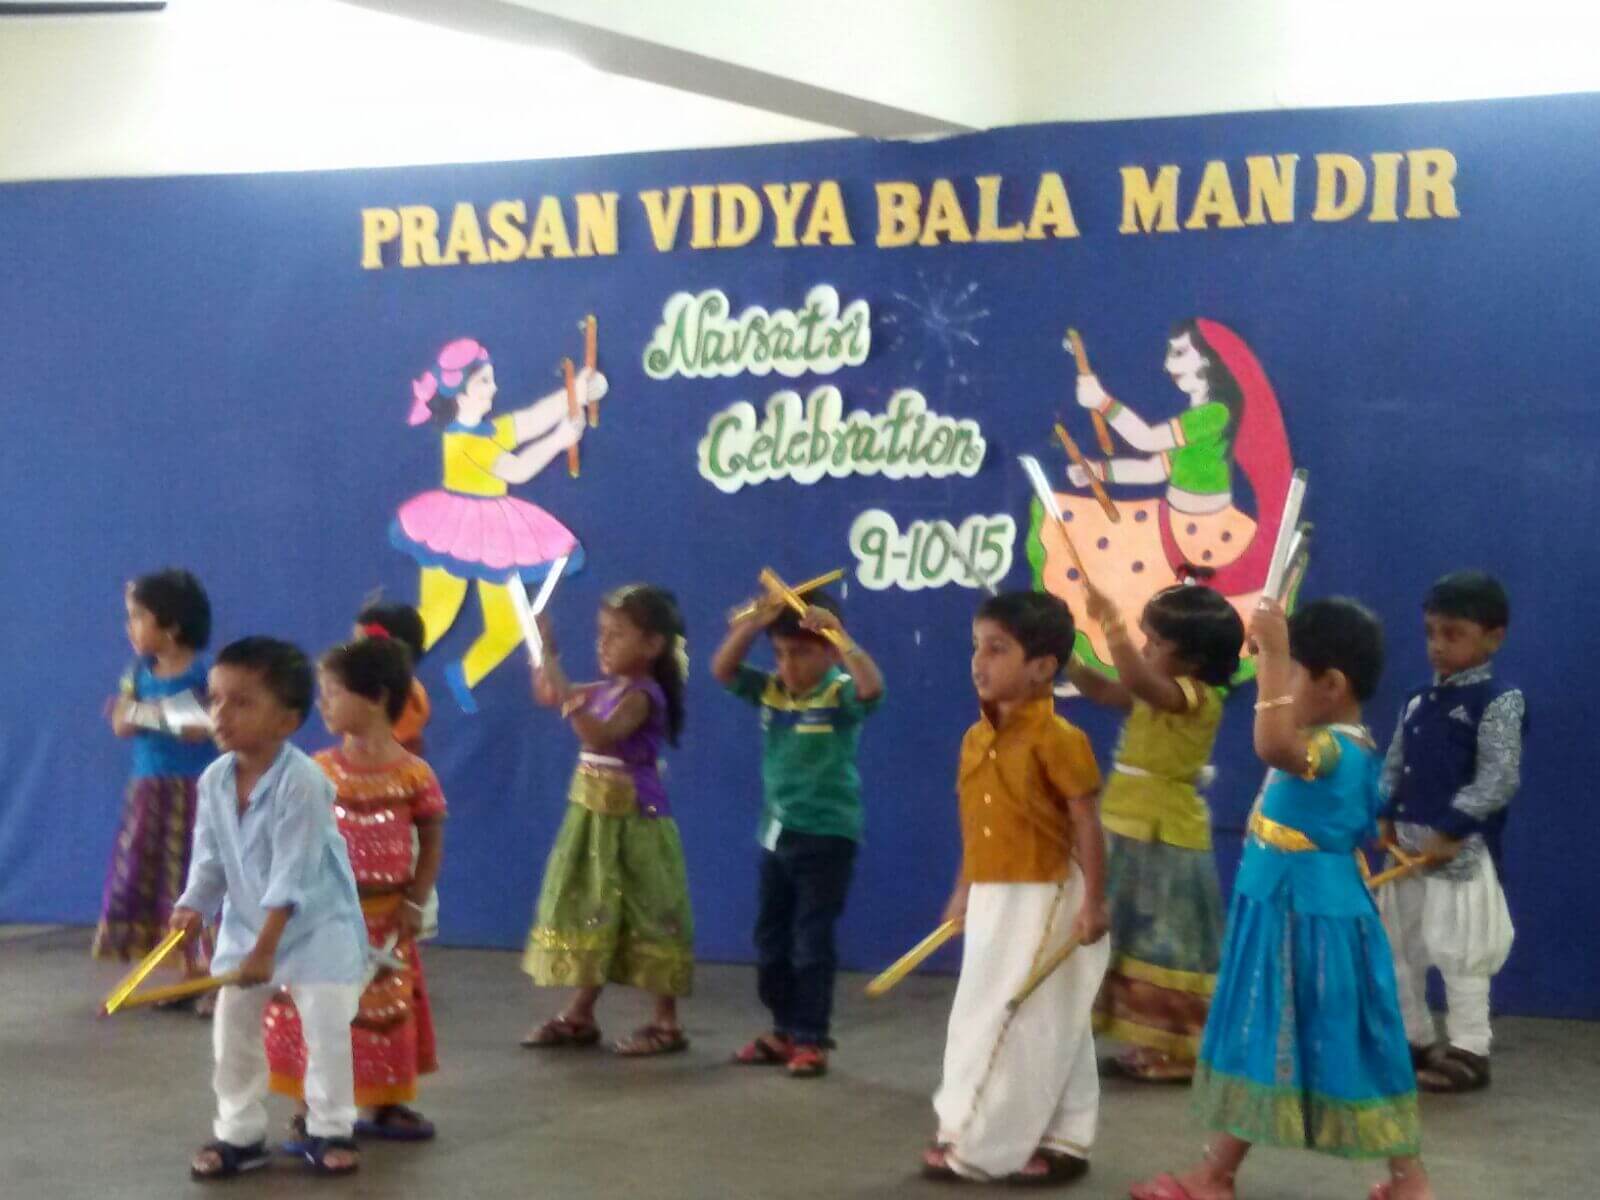  Little ones performing kolattam 